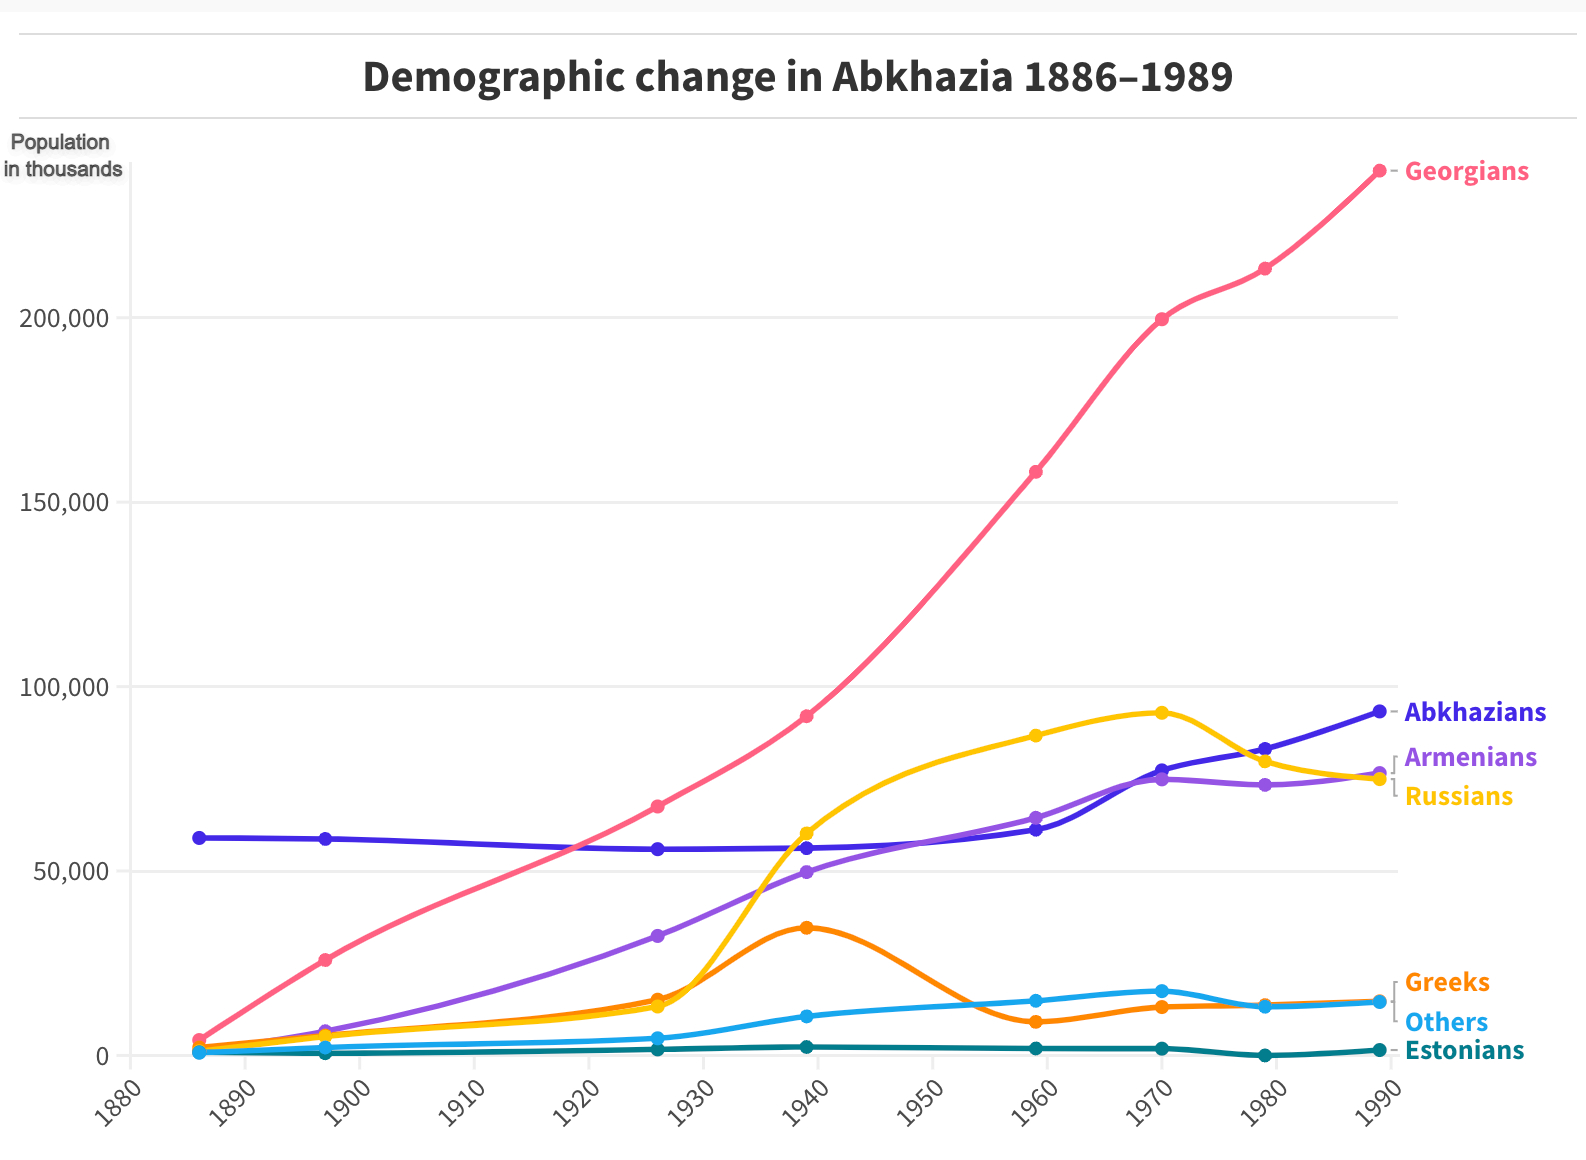 Demographic change in Abkhazia: 1886-1989